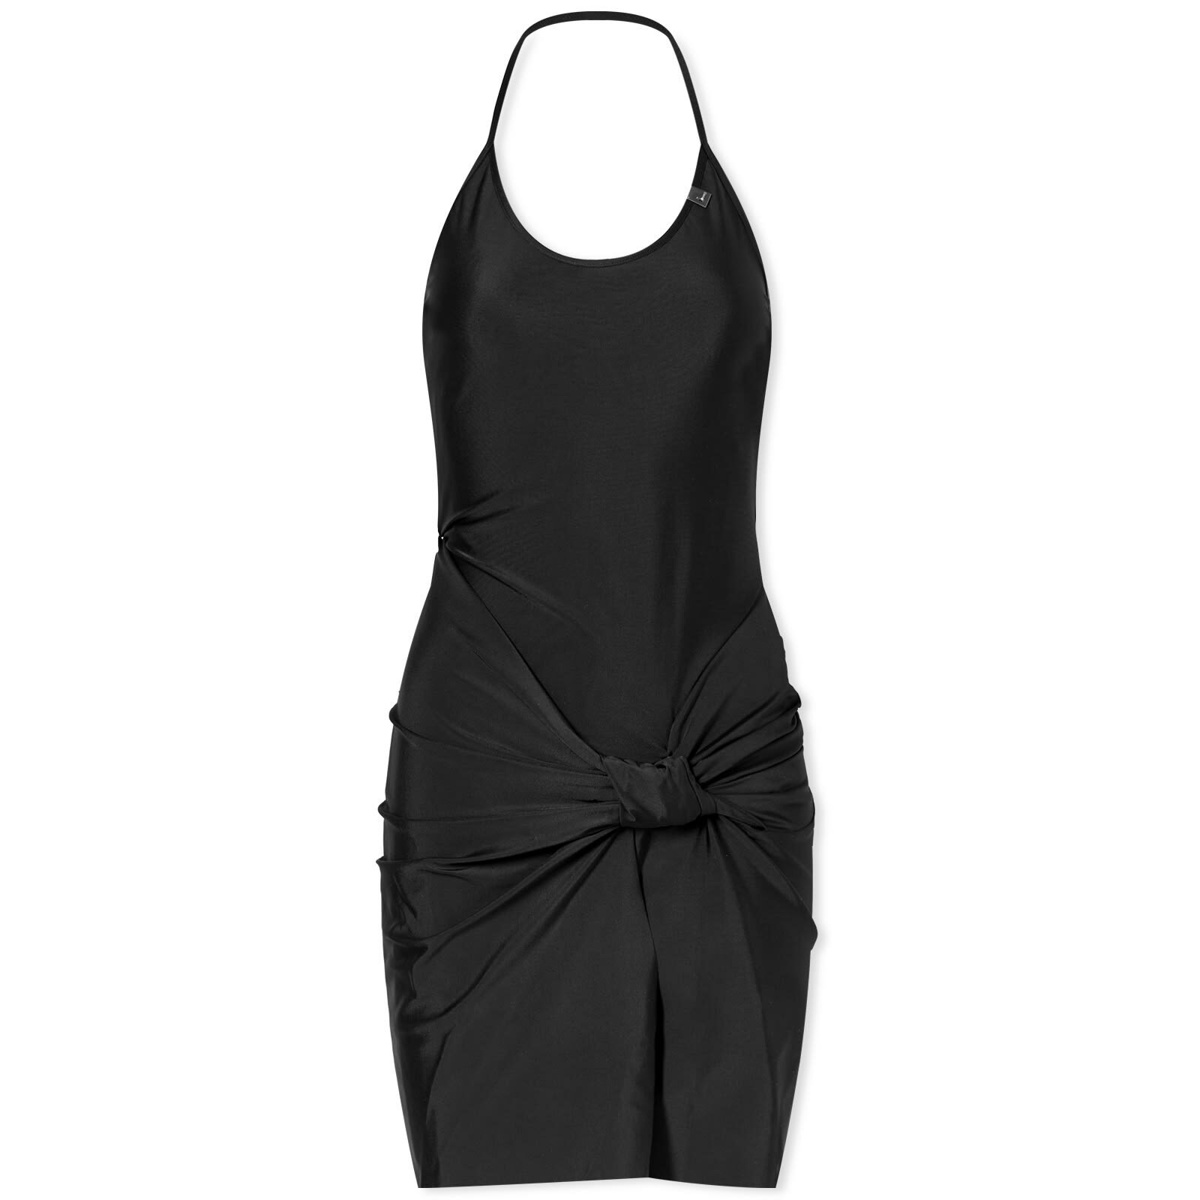 1017 ALYX 9SM Women's Short Swirl Dress in Black 1017 ALYX 9SM